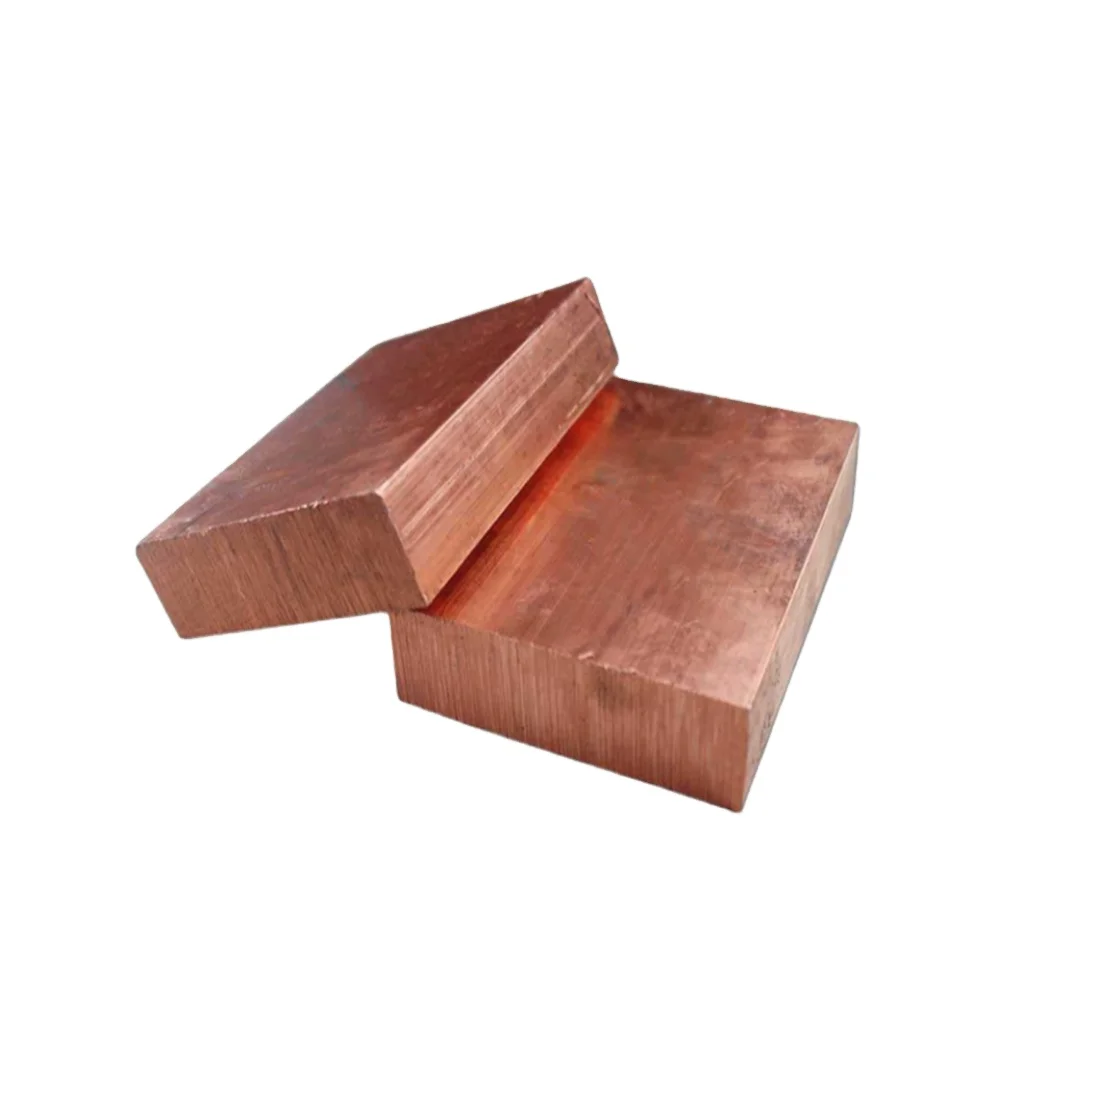 Pure Copper Ingot at Rs 450/kilogram, Bharuch